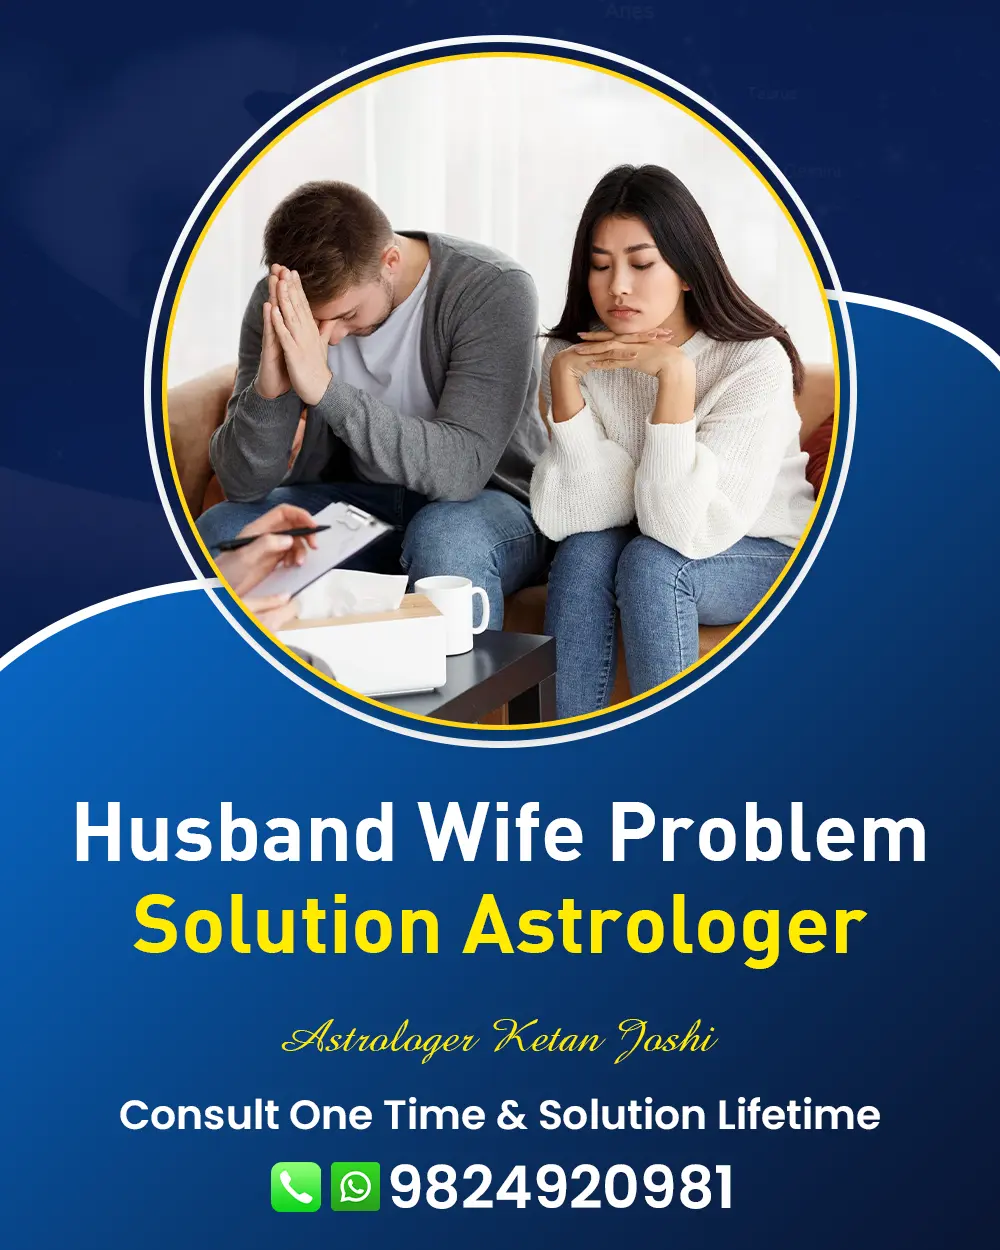 Husband Wife Problem Solution Astrologer In Chotila